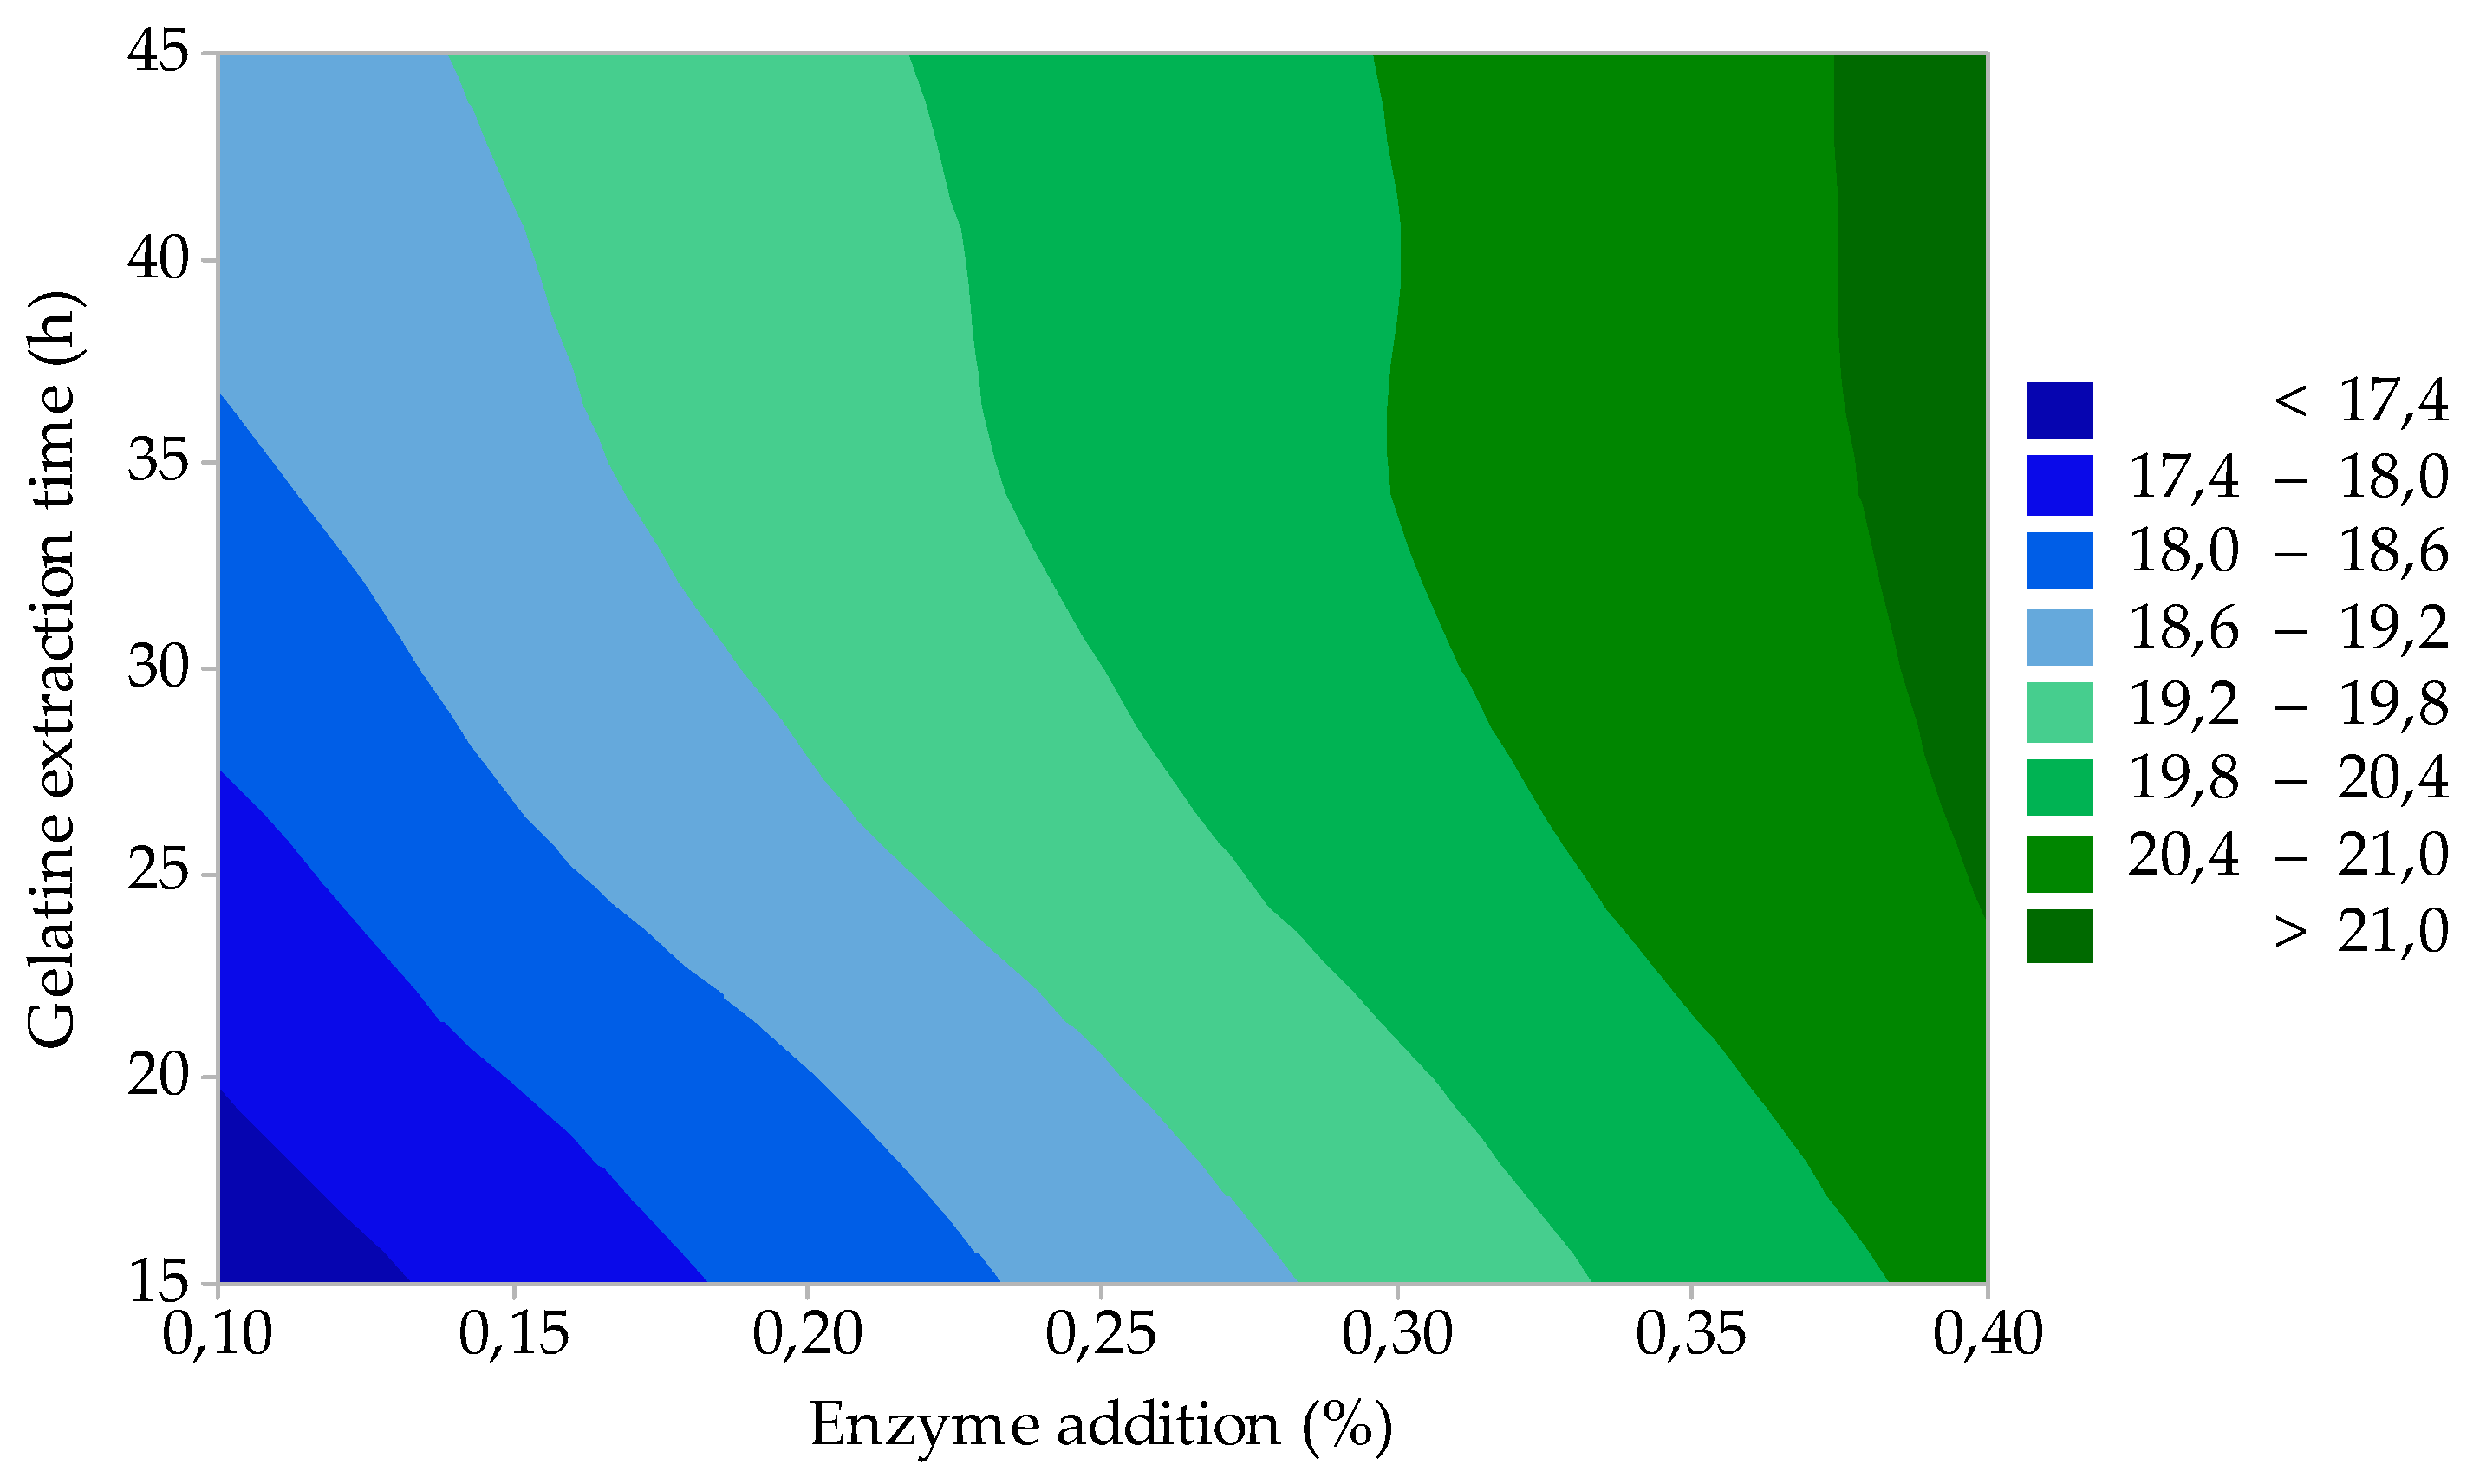 Gelatin Bloom Conversion Chart